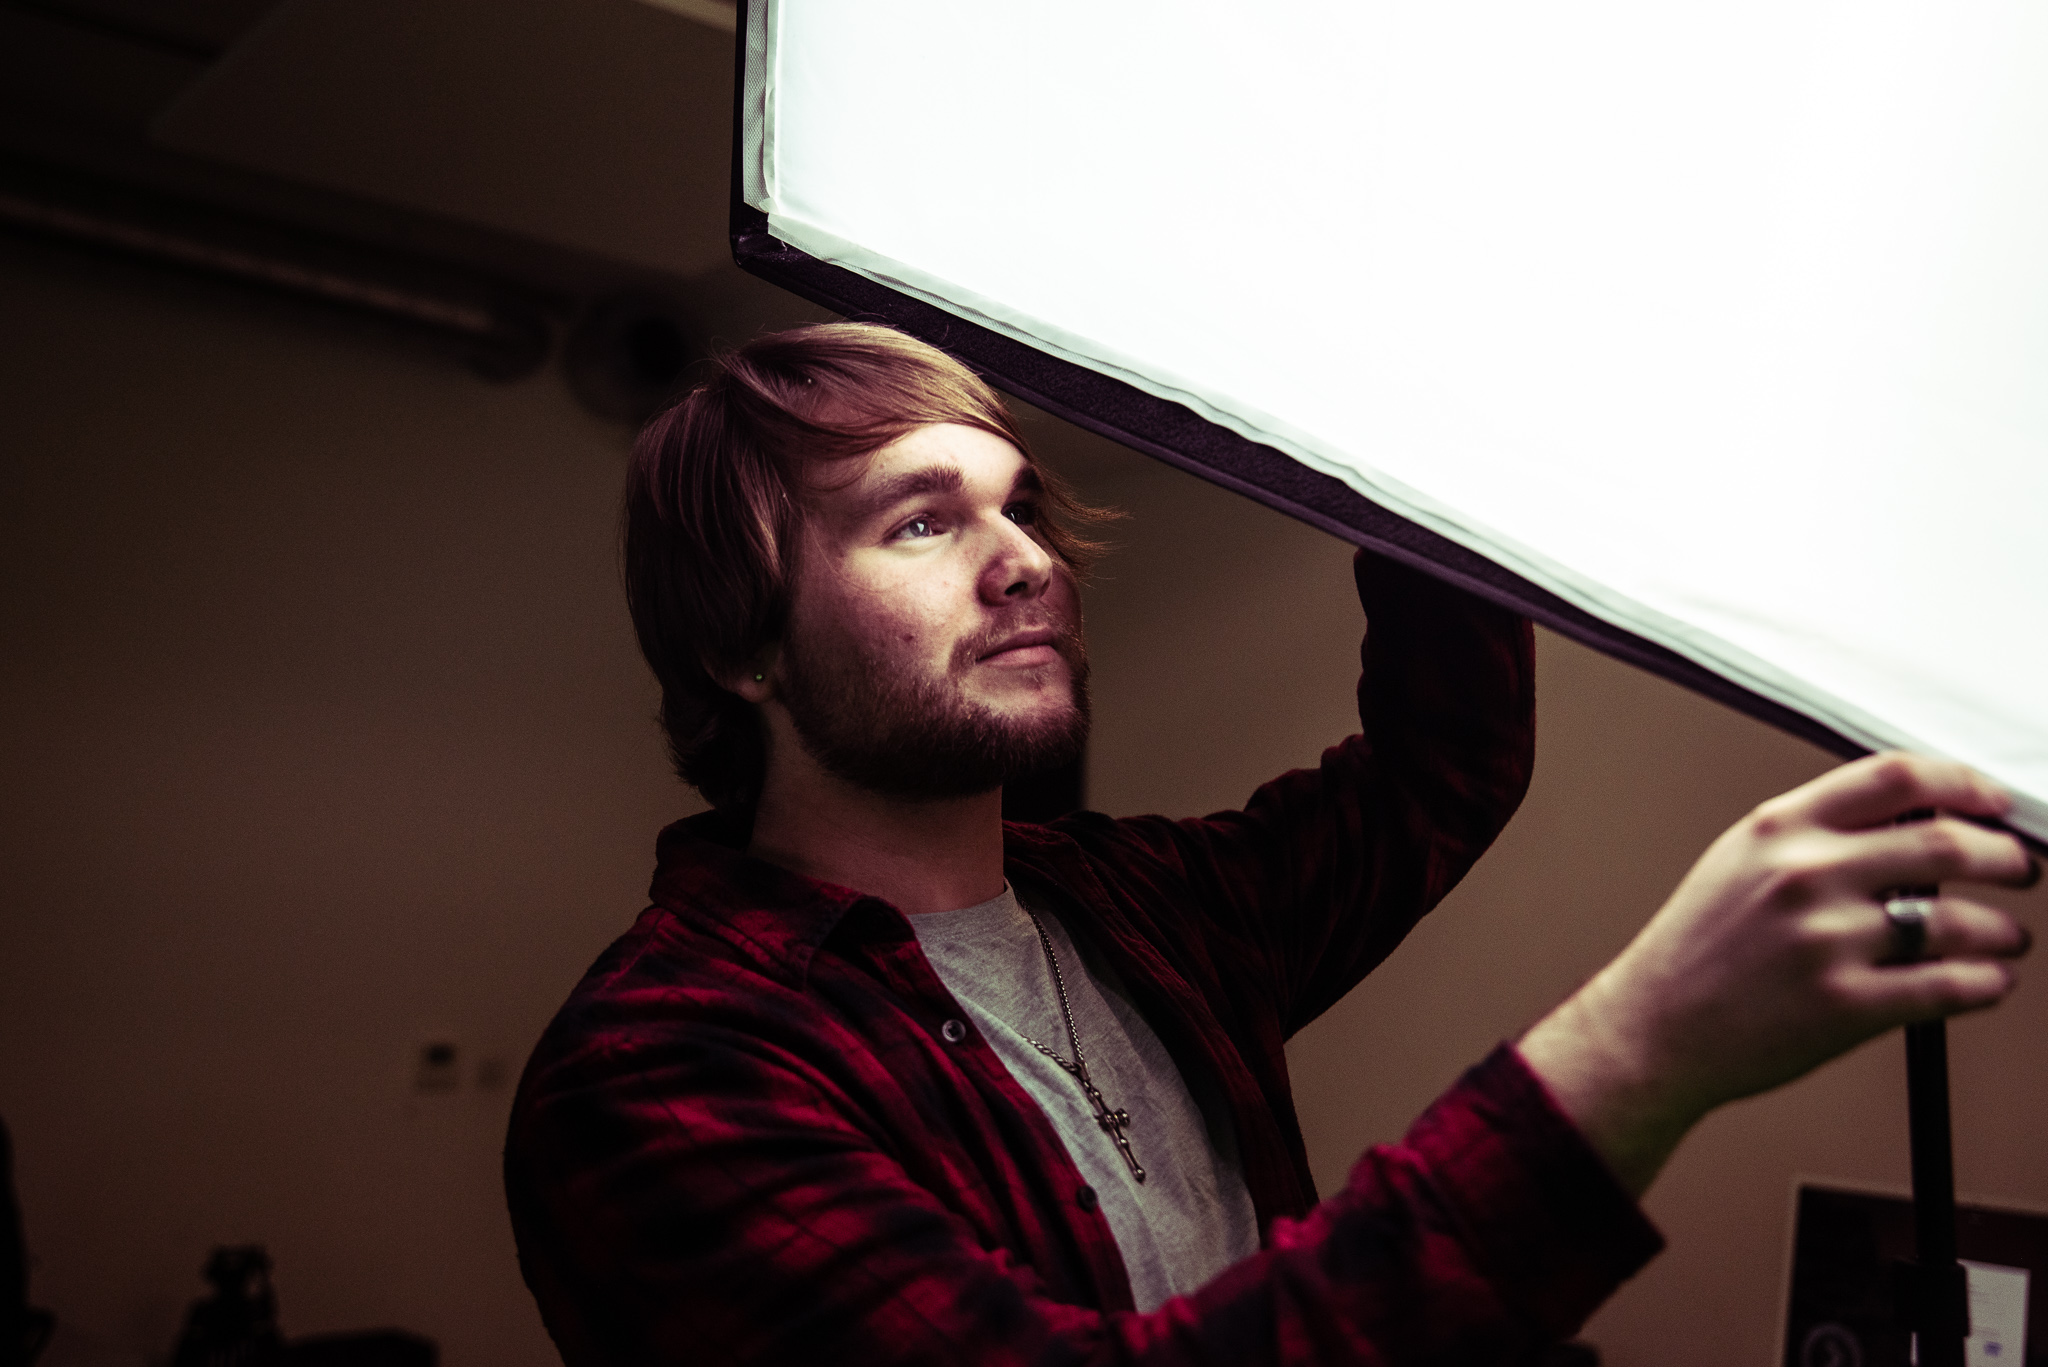 Marketing apprentice arranging lighting on set